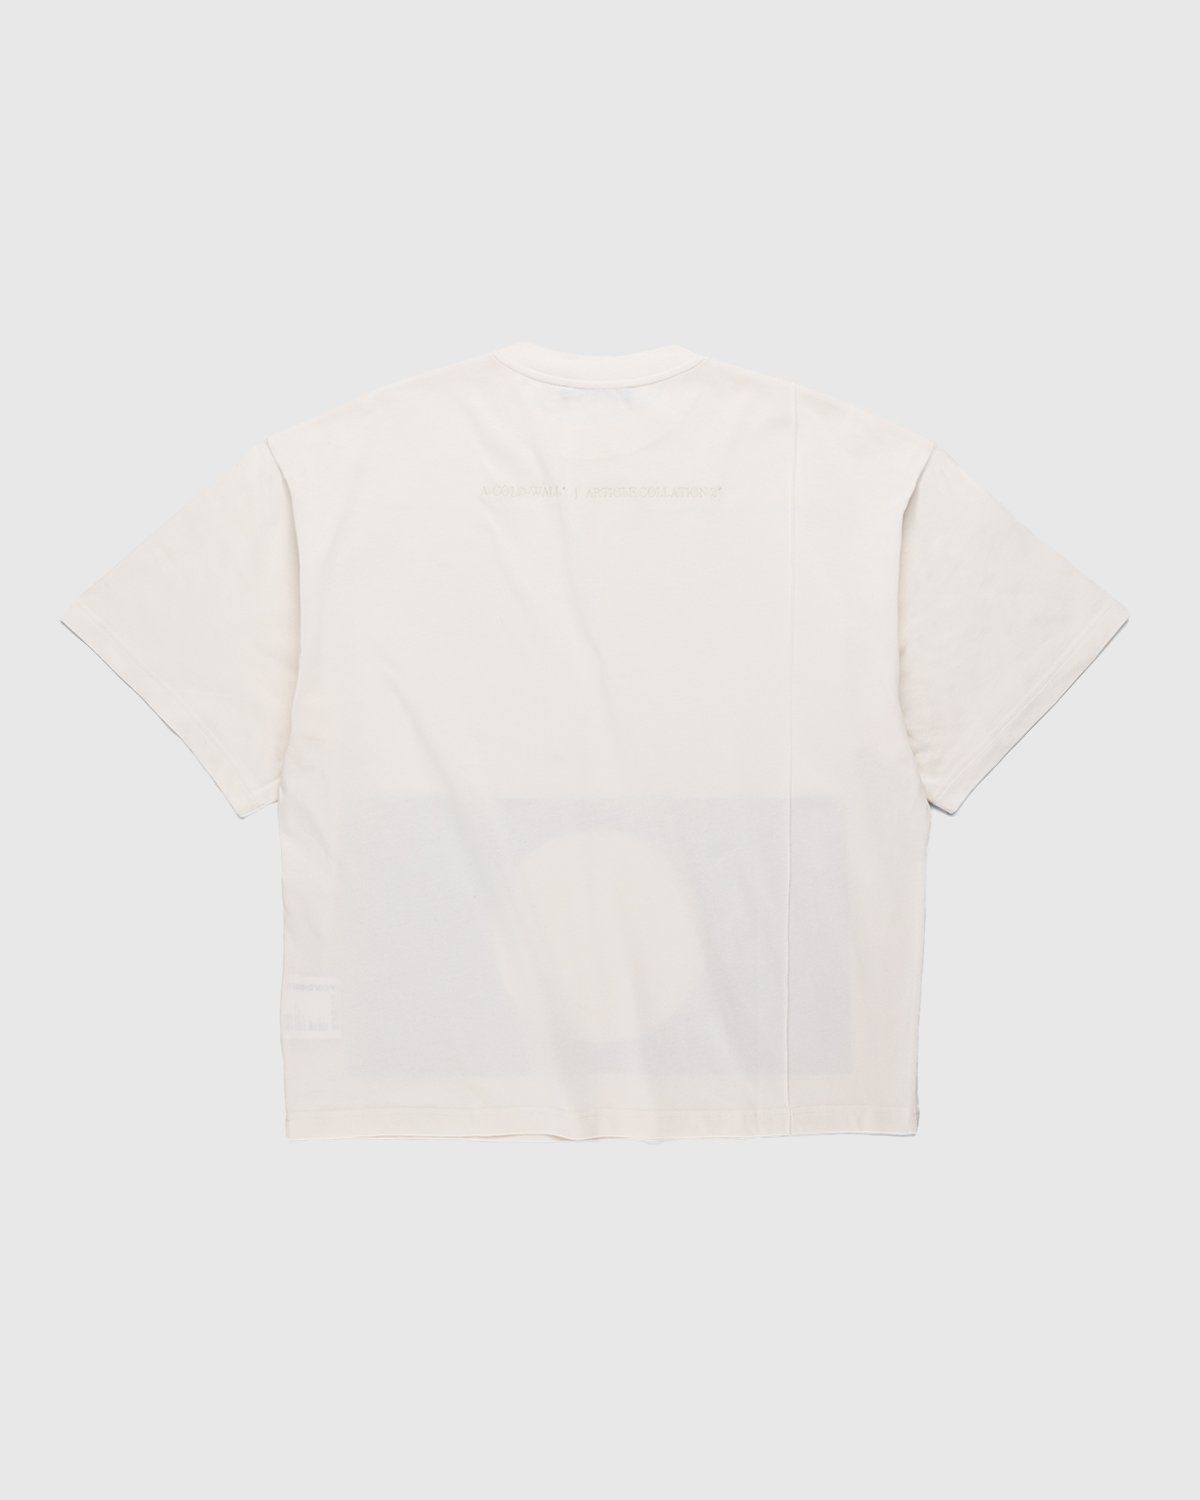 A-COLD-WALL* – Hemisphere Print T-Shirt Warm White - Image 2